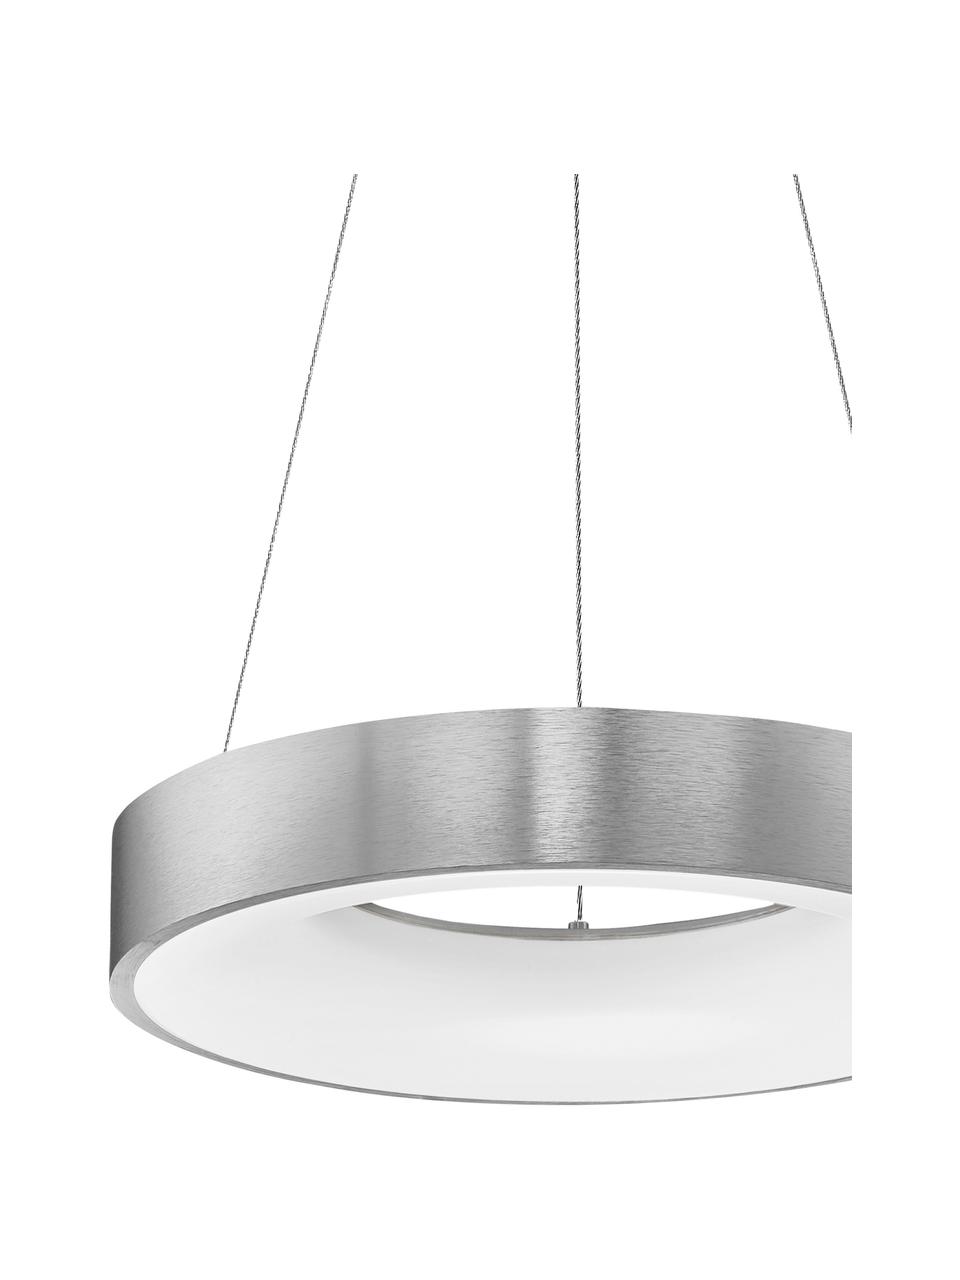 Dimbare LED hanglamp Rando in zilverkleur, Lampenkap: gecoat aluminium, Diffuser: acryl, Baldakijn: gecoat aluminium, Zilverkleurig, Ø 60 x H 6 cm